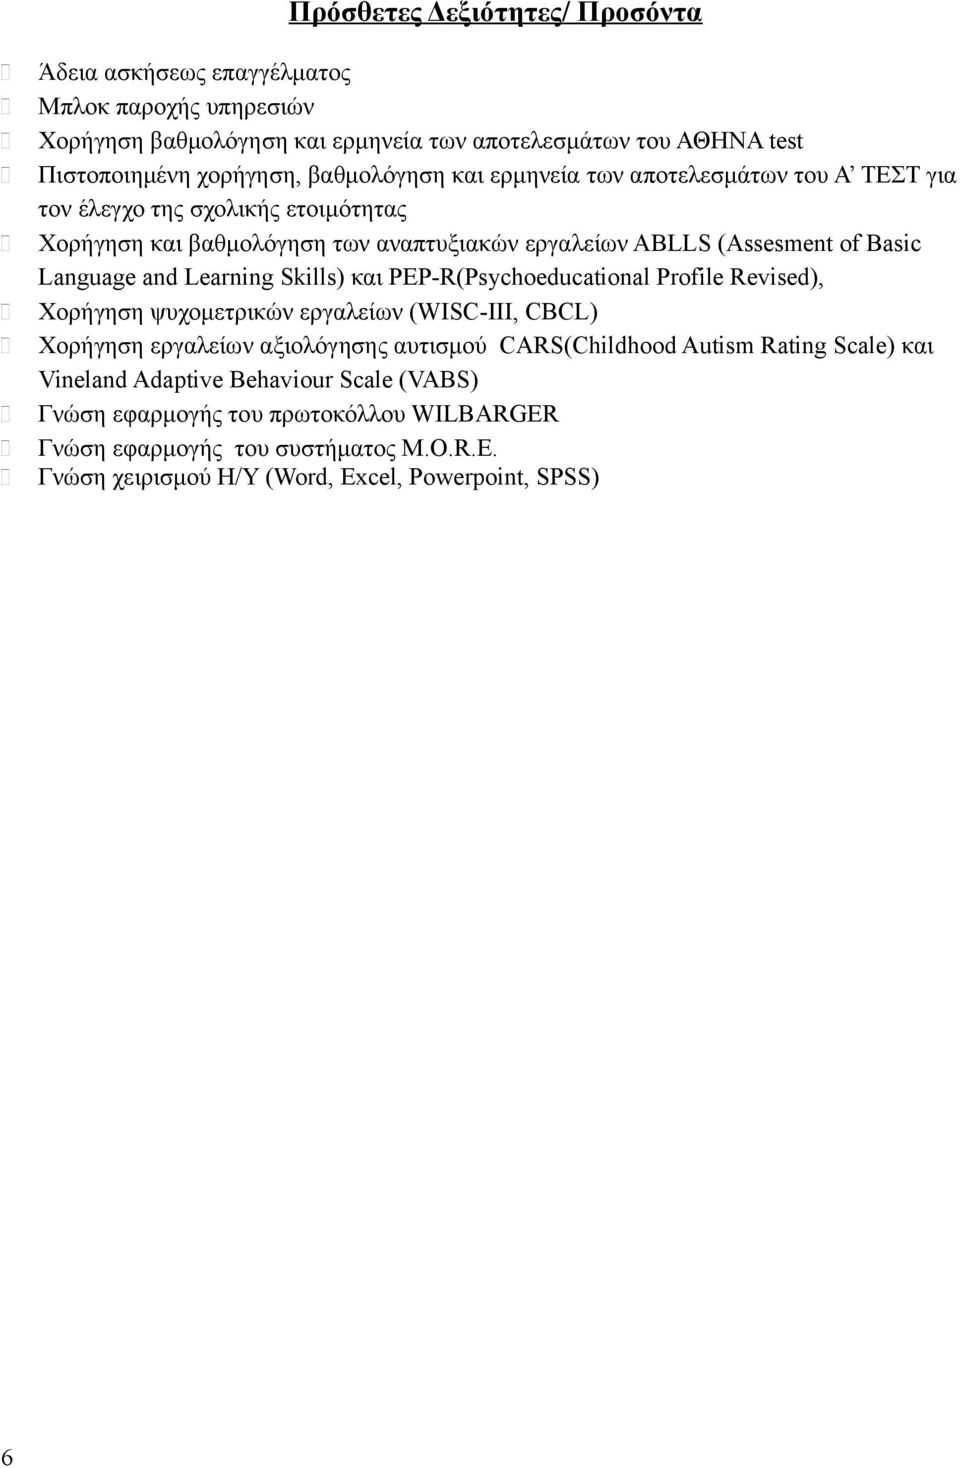 and Learning Skills) και PEP-R(Psychoeducational Profile Revised), Χορήγηση ψυχομετρικών εργαλείων (WISC-III, CBCL) Χορήγηση εργαλείων αξιολόγησης αυτισμού CARS(Childhood Autism